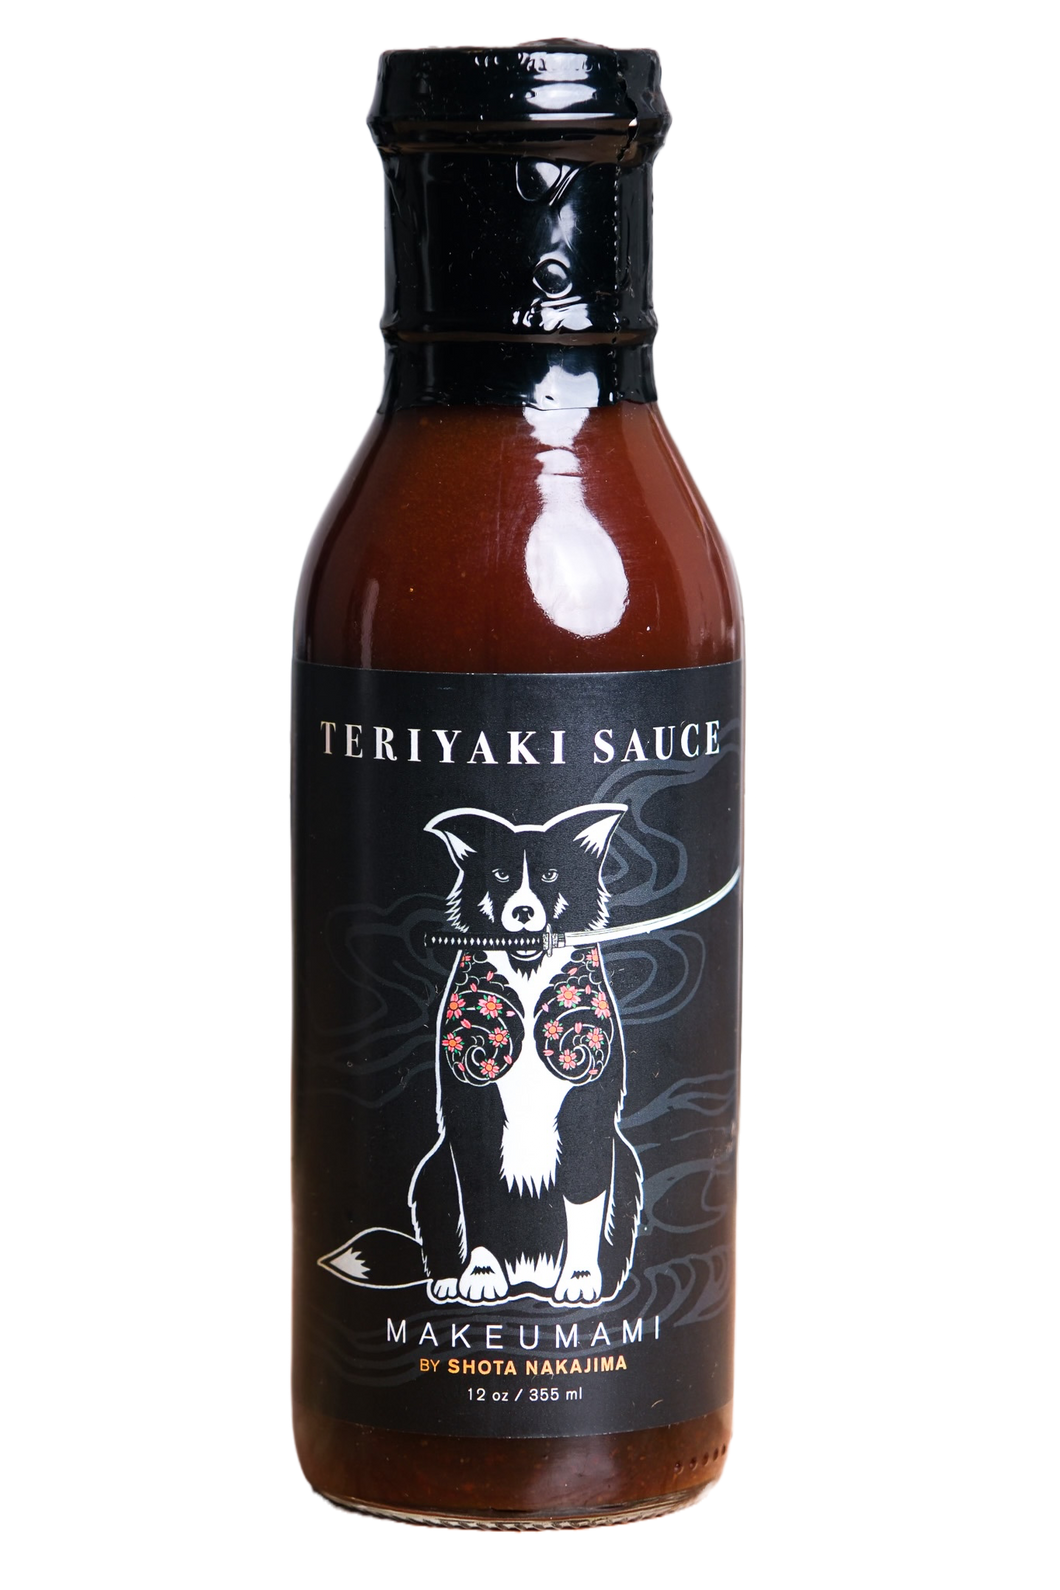 Teriyaki Sauce by Shota Nakajima